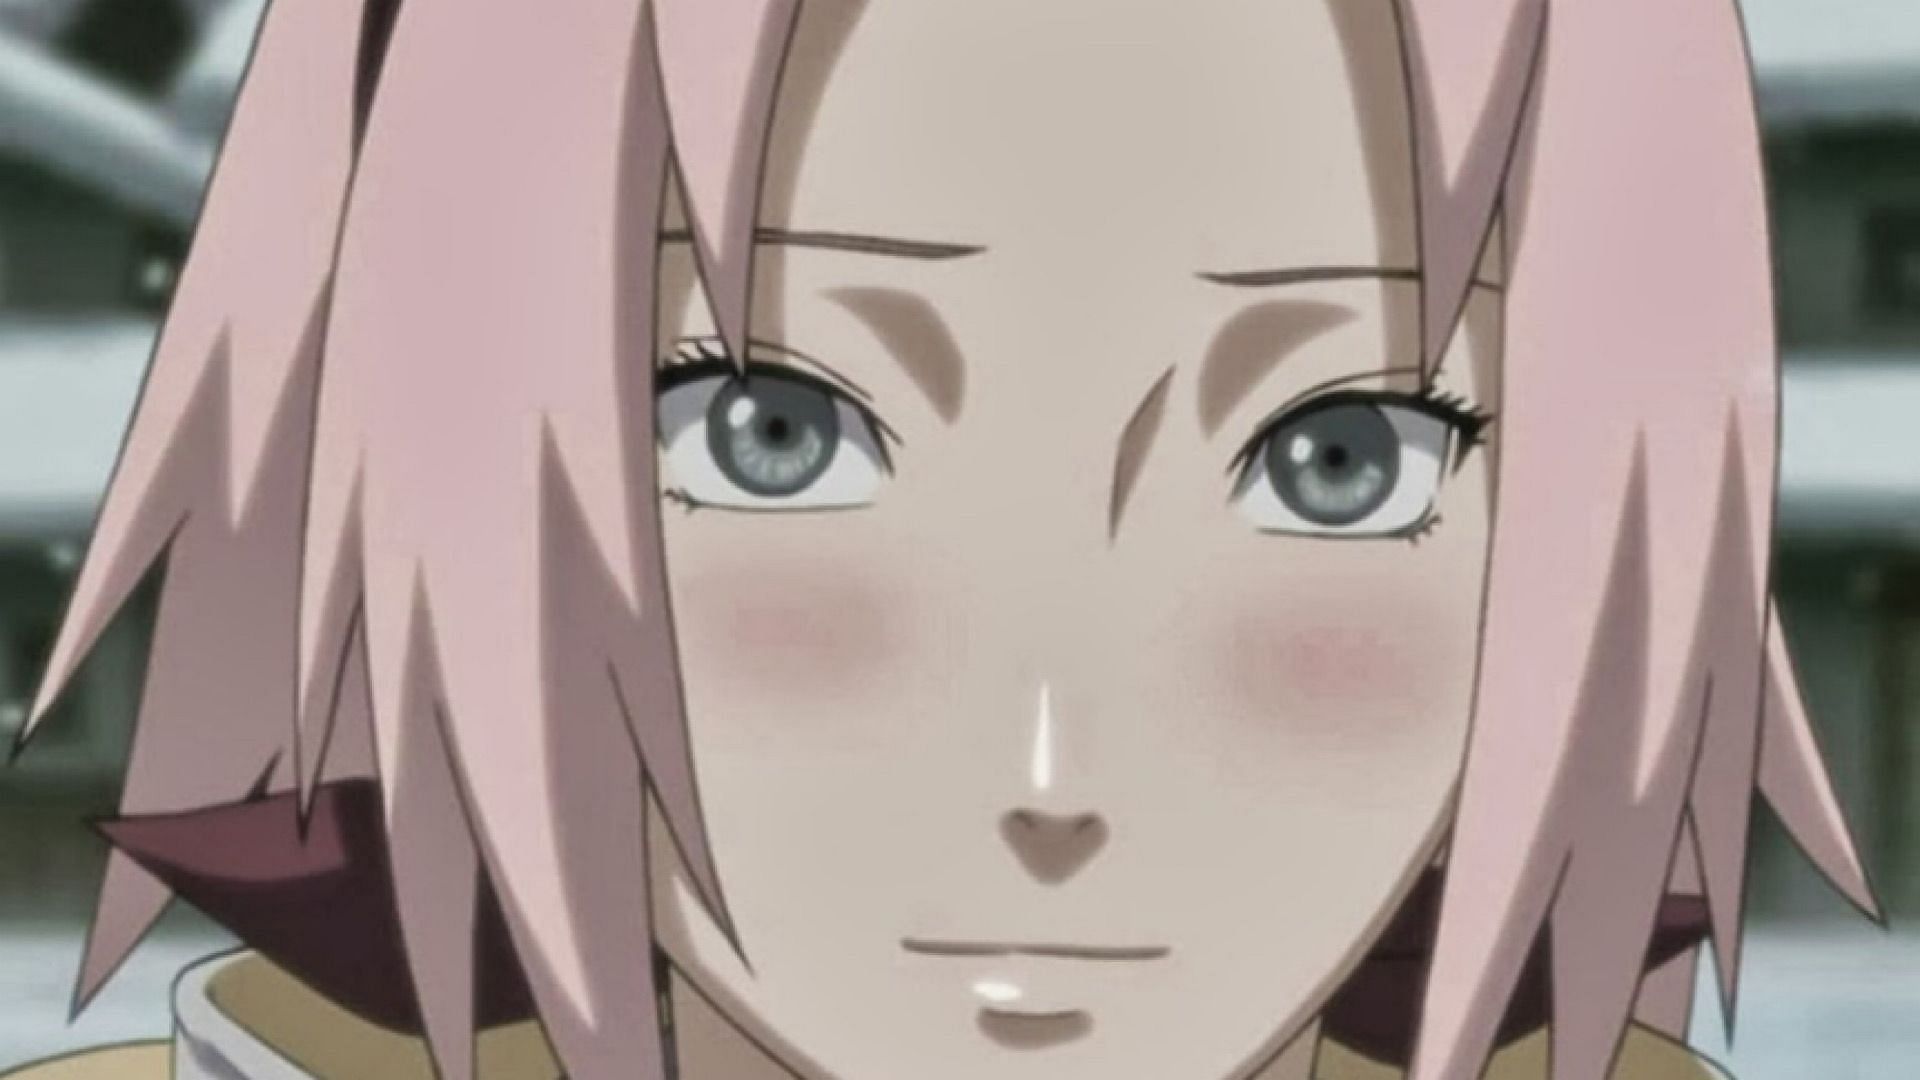 Sakura falsely confessed to Naruto (Image via Naruto Anime)